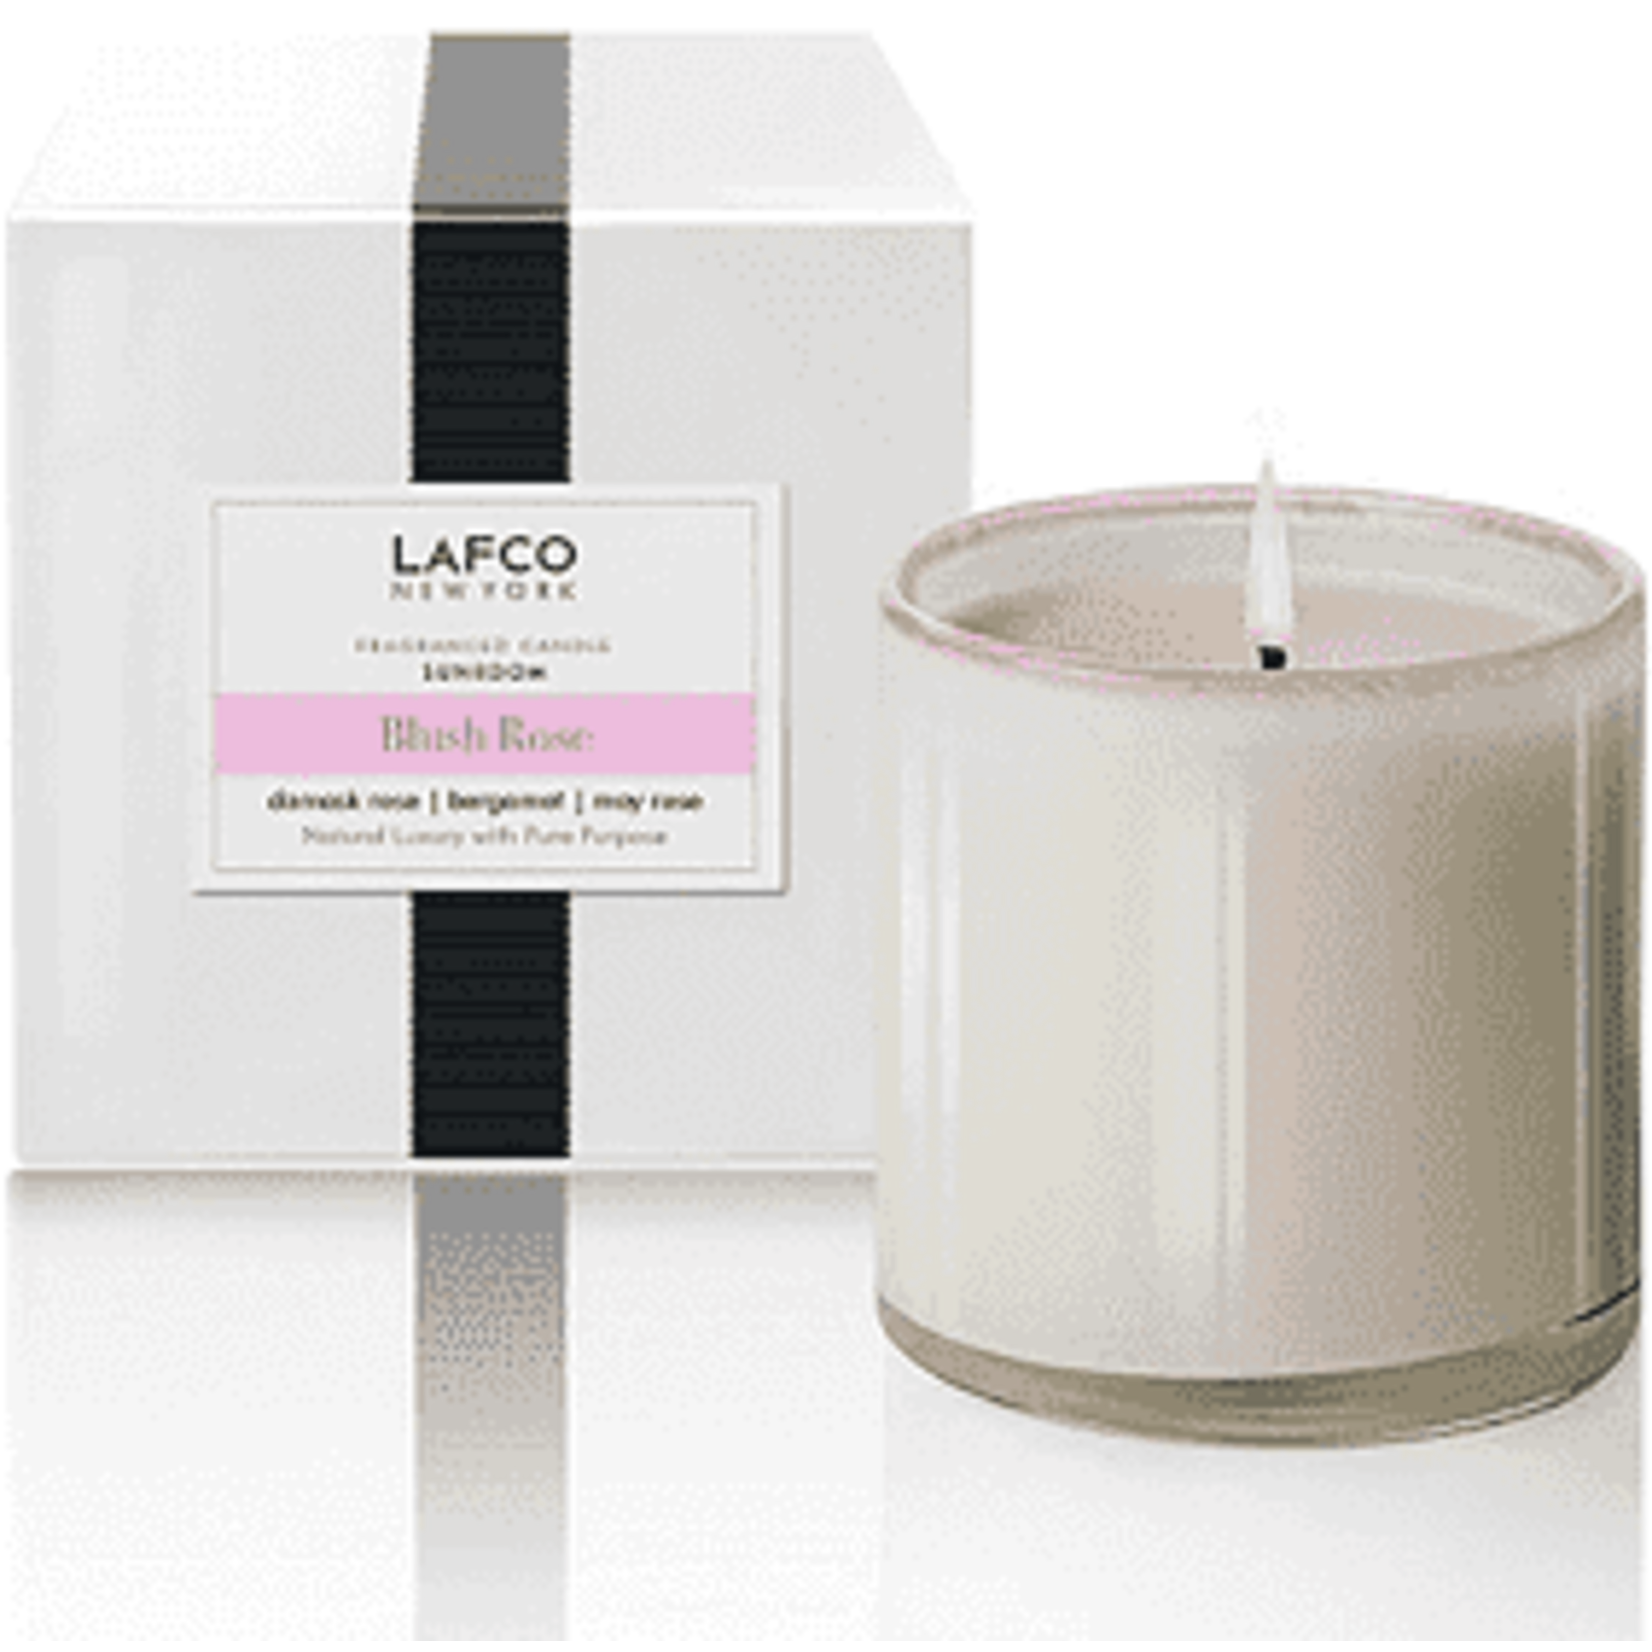 LAFCO LAFCO Sunroom Blush Rose Candle (15.5 oz)